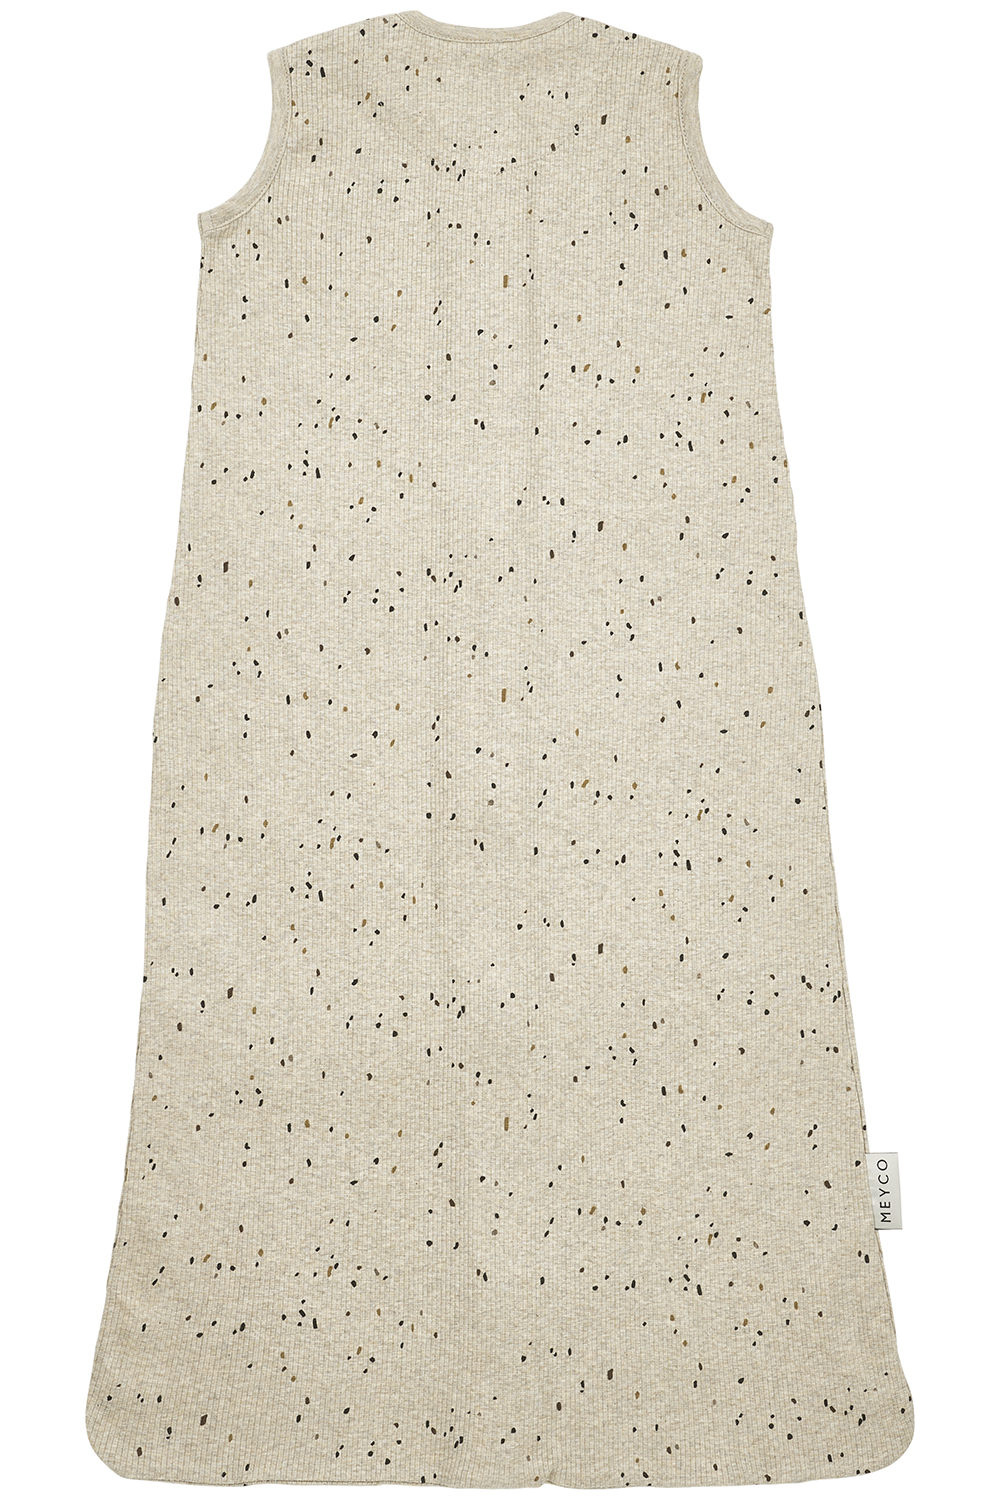 Sleepingbag Rib Mini Spot - sand melange - 110cm